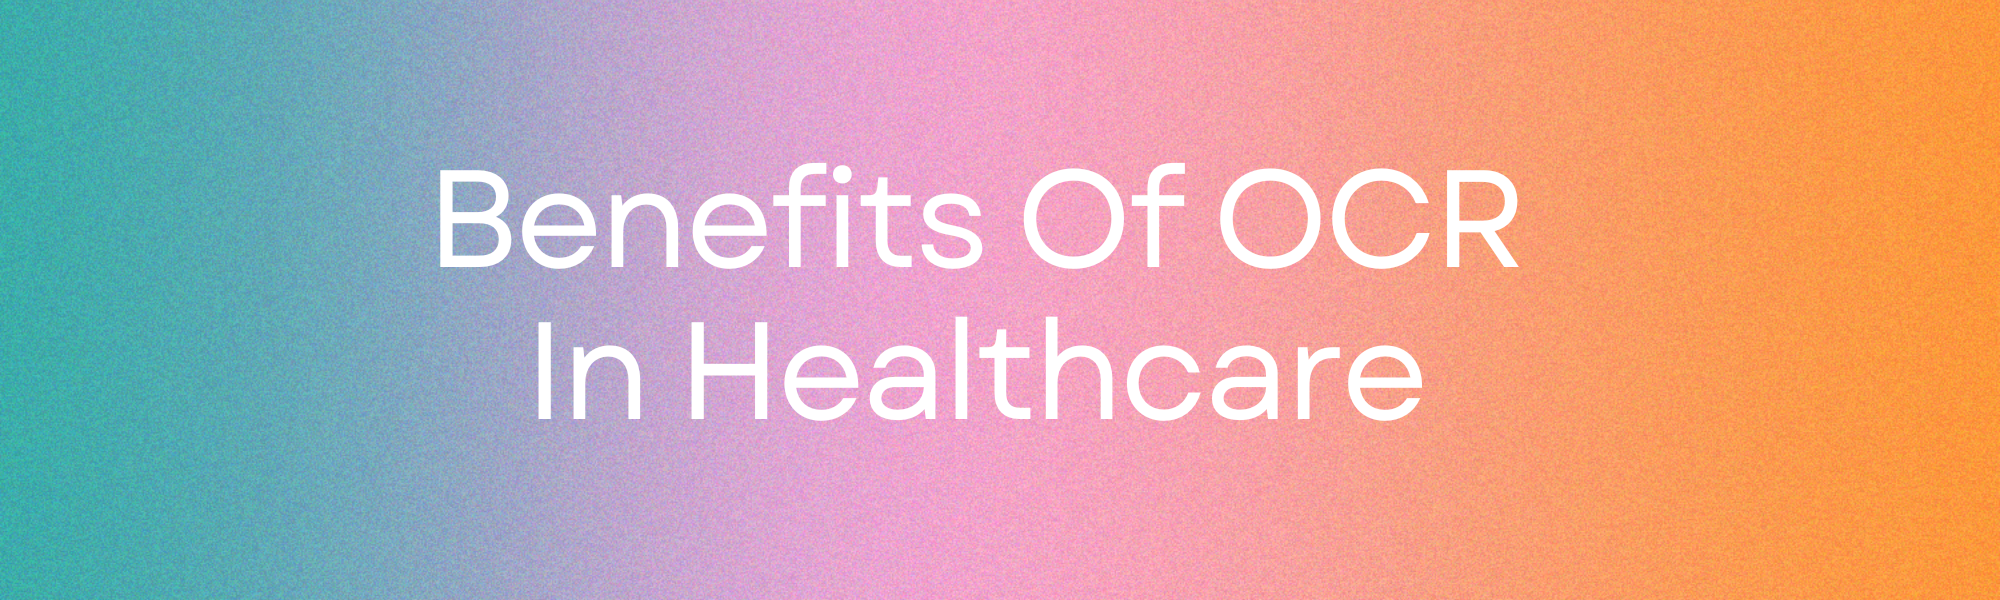 Benefits Of OCR In Healthcare